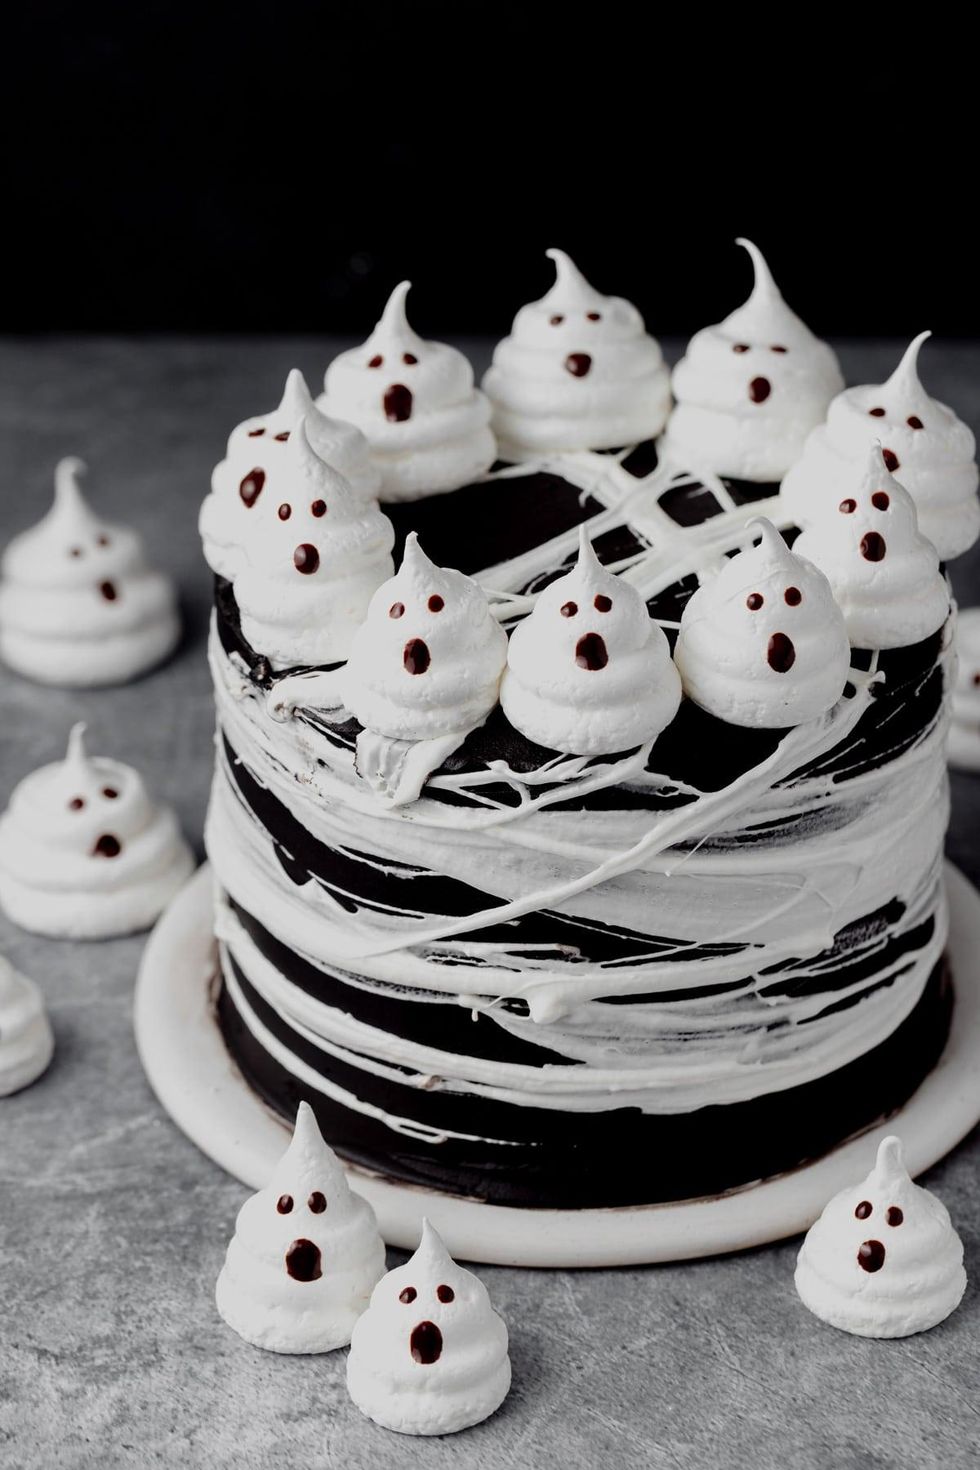 https://www.brit.co/media-library/halloween-cake-recipes-and-ideas.jpg?id=31880533&width=980